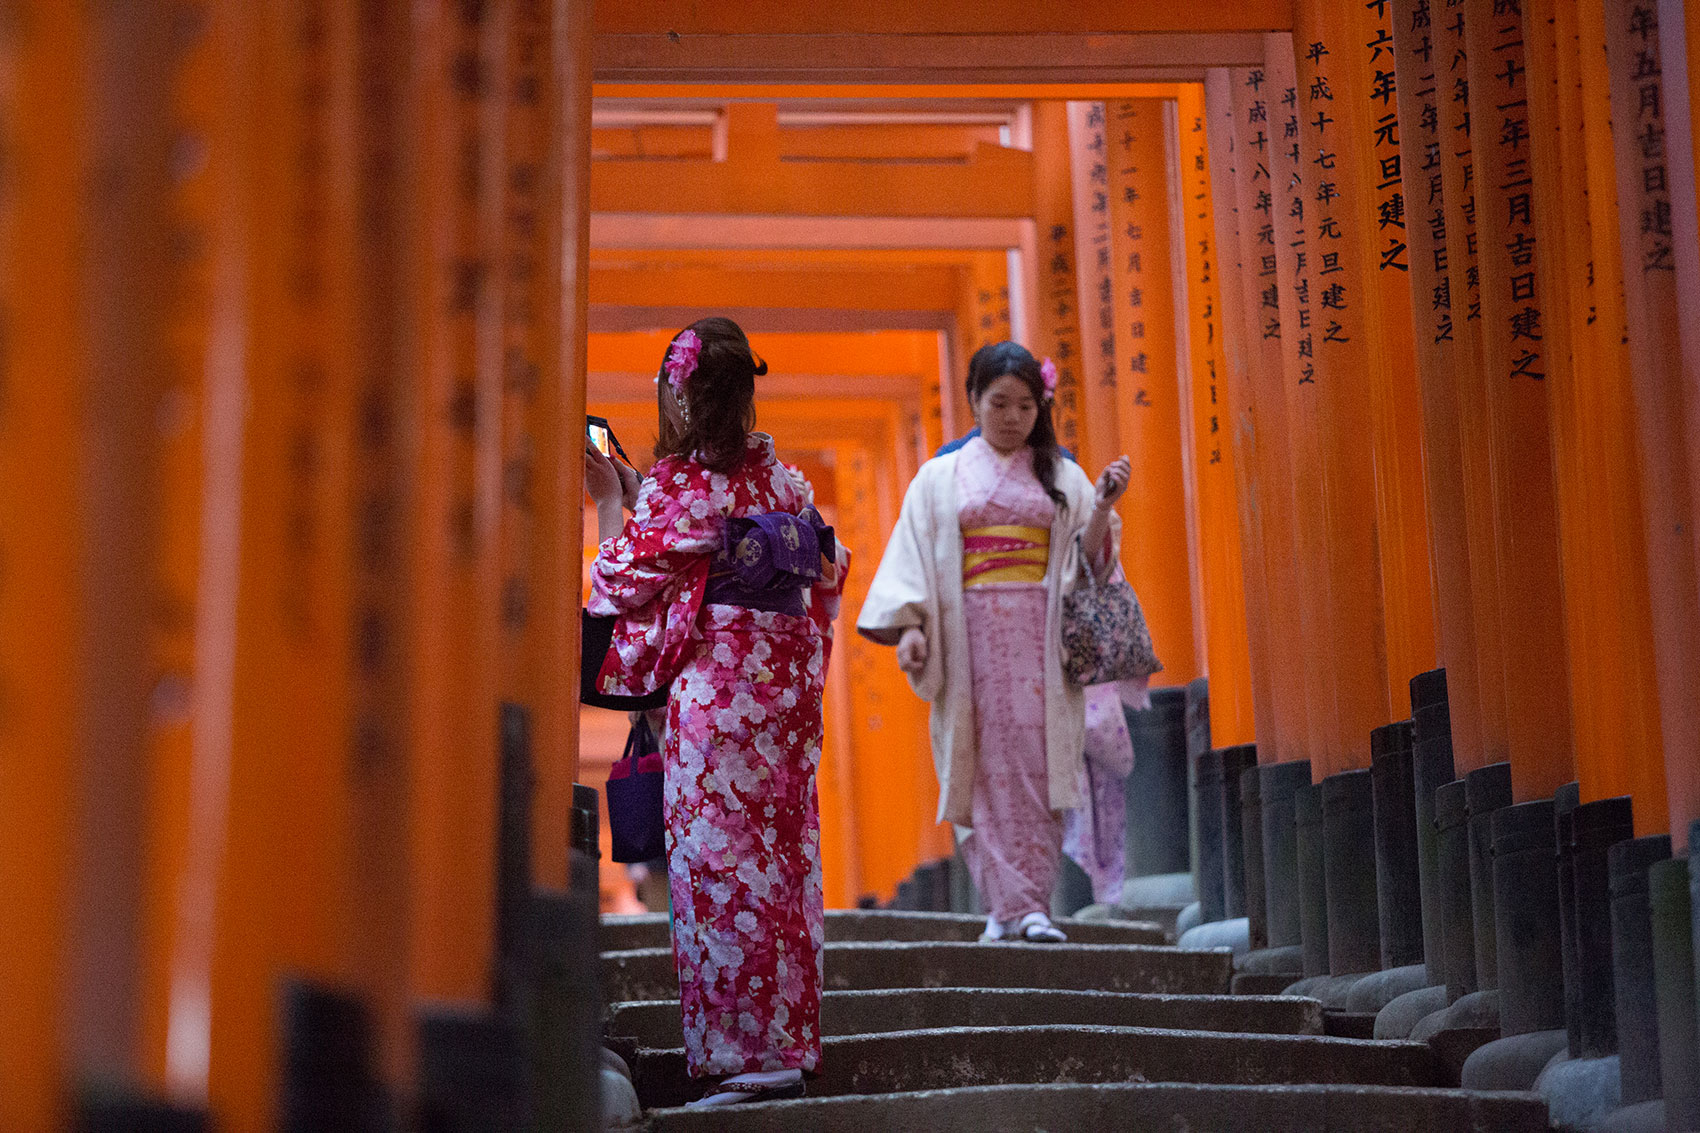 Fushimi Inari in Japan